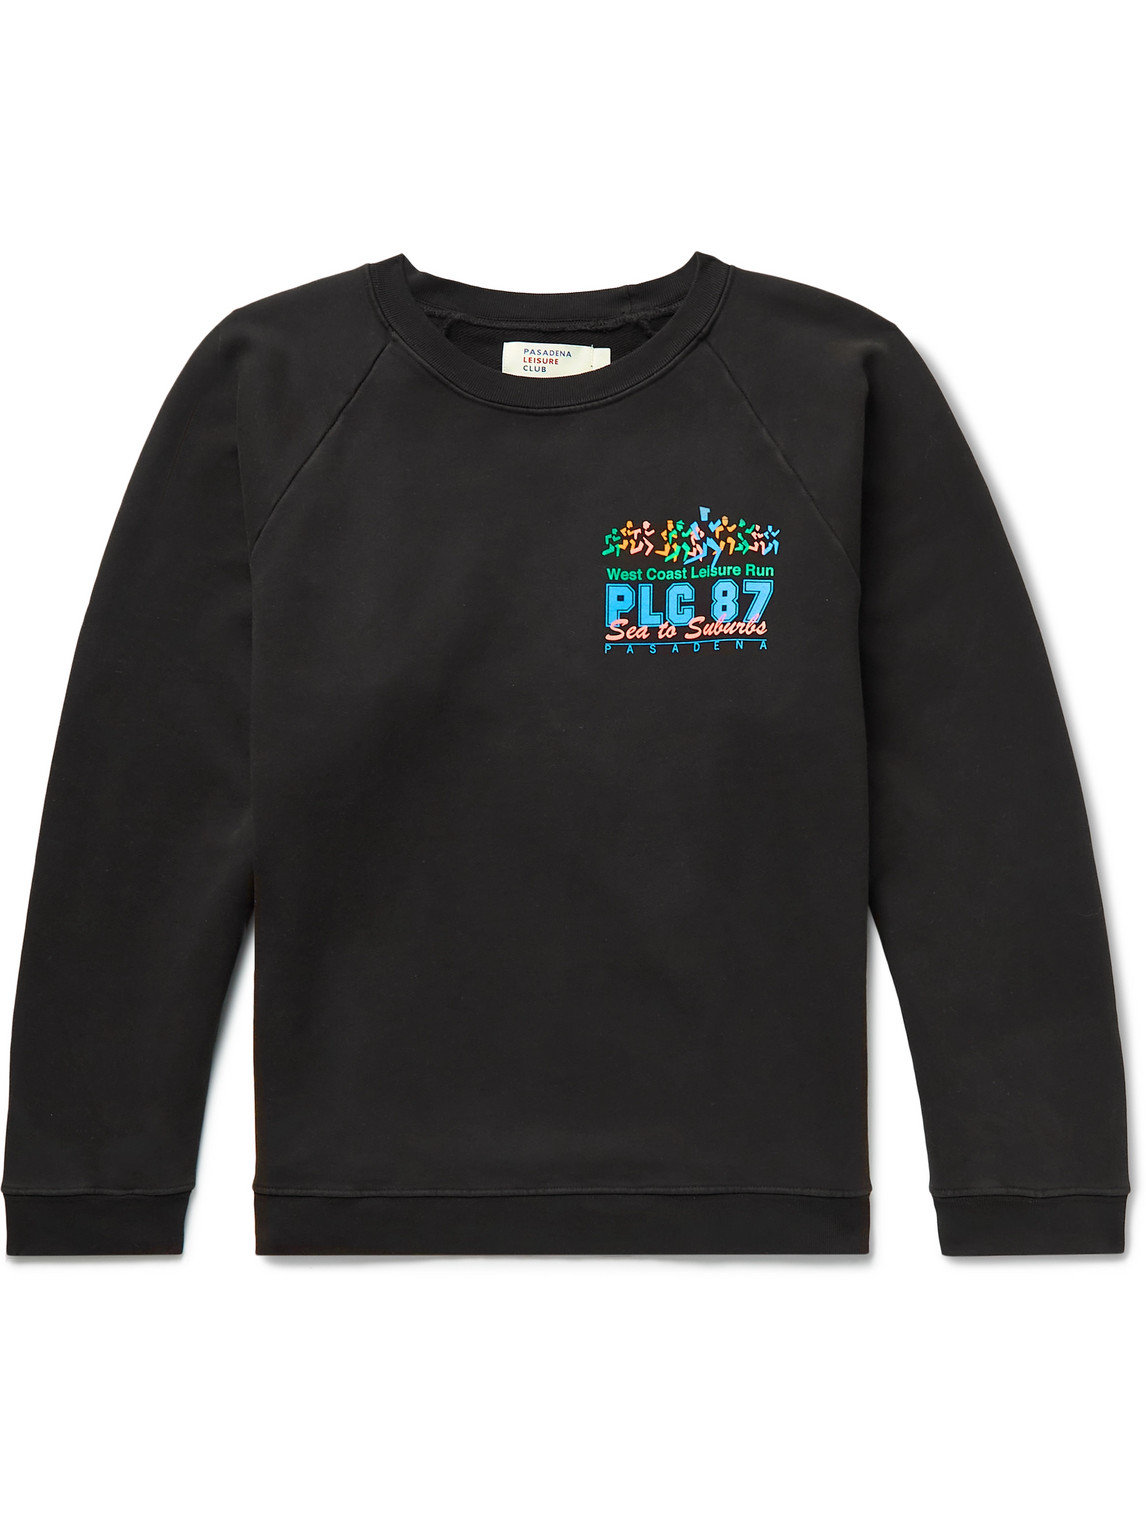 Pasadena Leisure Club Leisure Run Printed Cotton-jersey Sweatshirt In Black